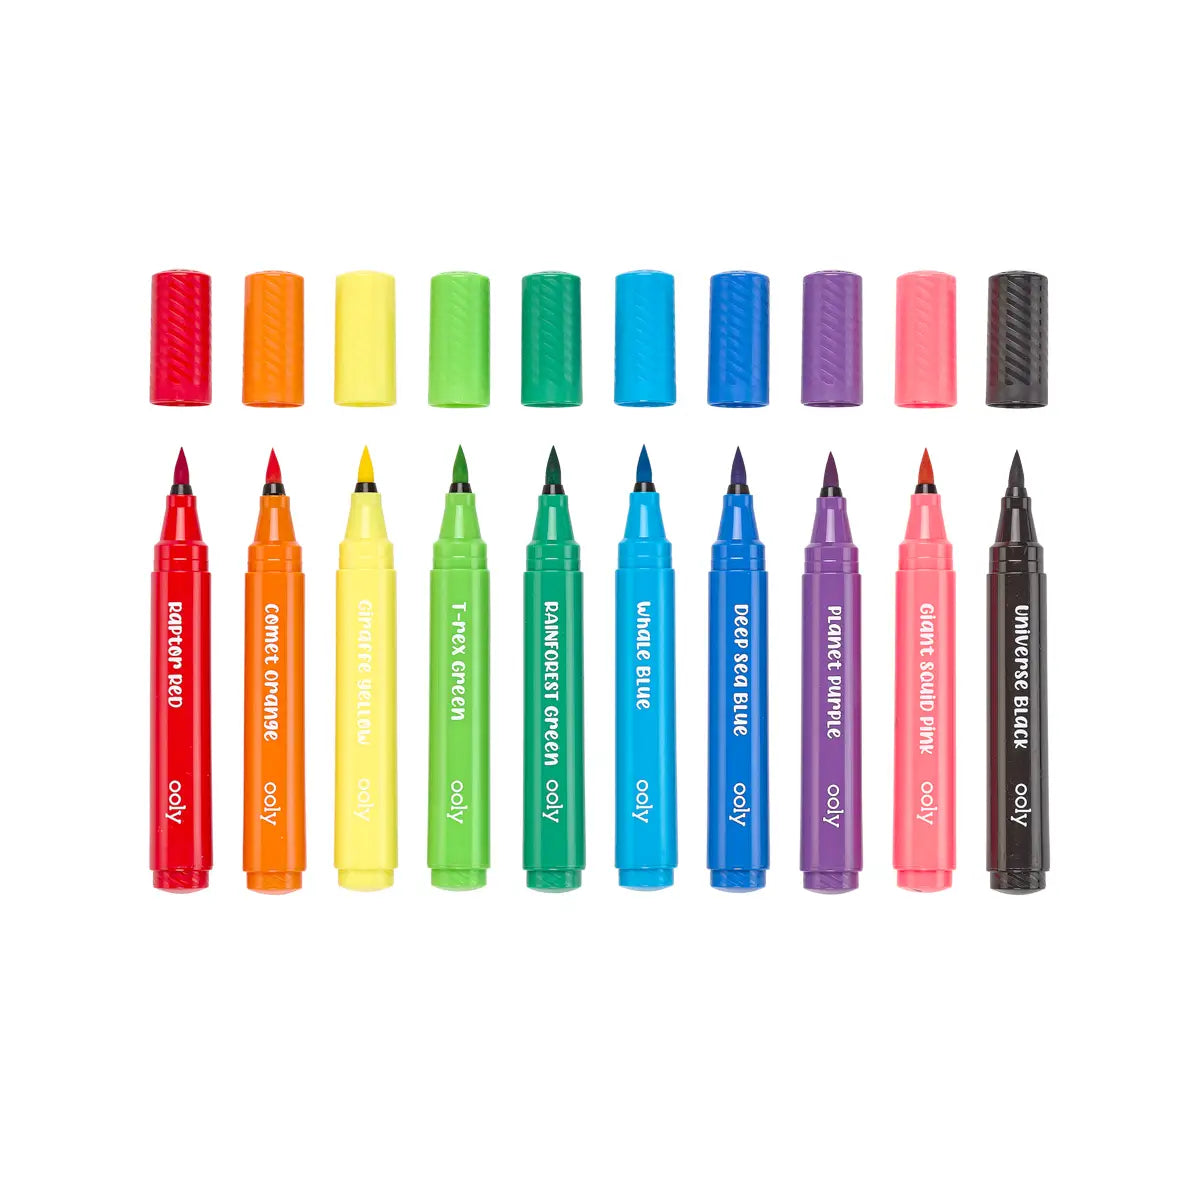 Big Bright Brush Markers – Set of 10